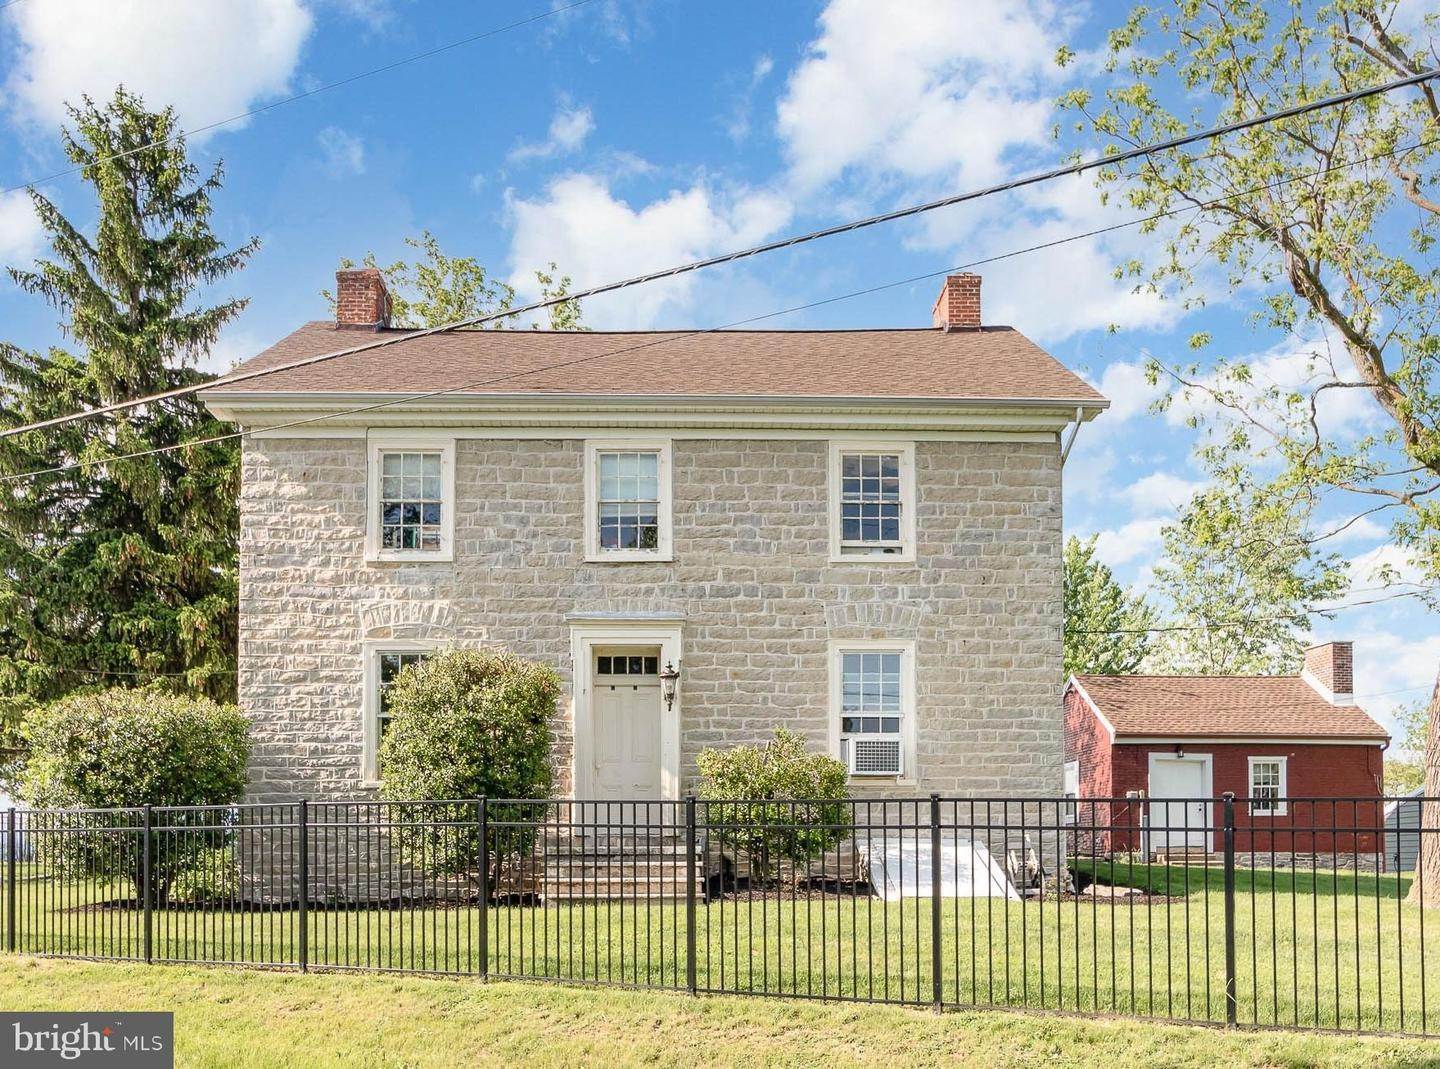 Single Family Homes για την Πώληση στο Newville, Πενσιλβανια 17241 Ηνωμένες Πολιτείες